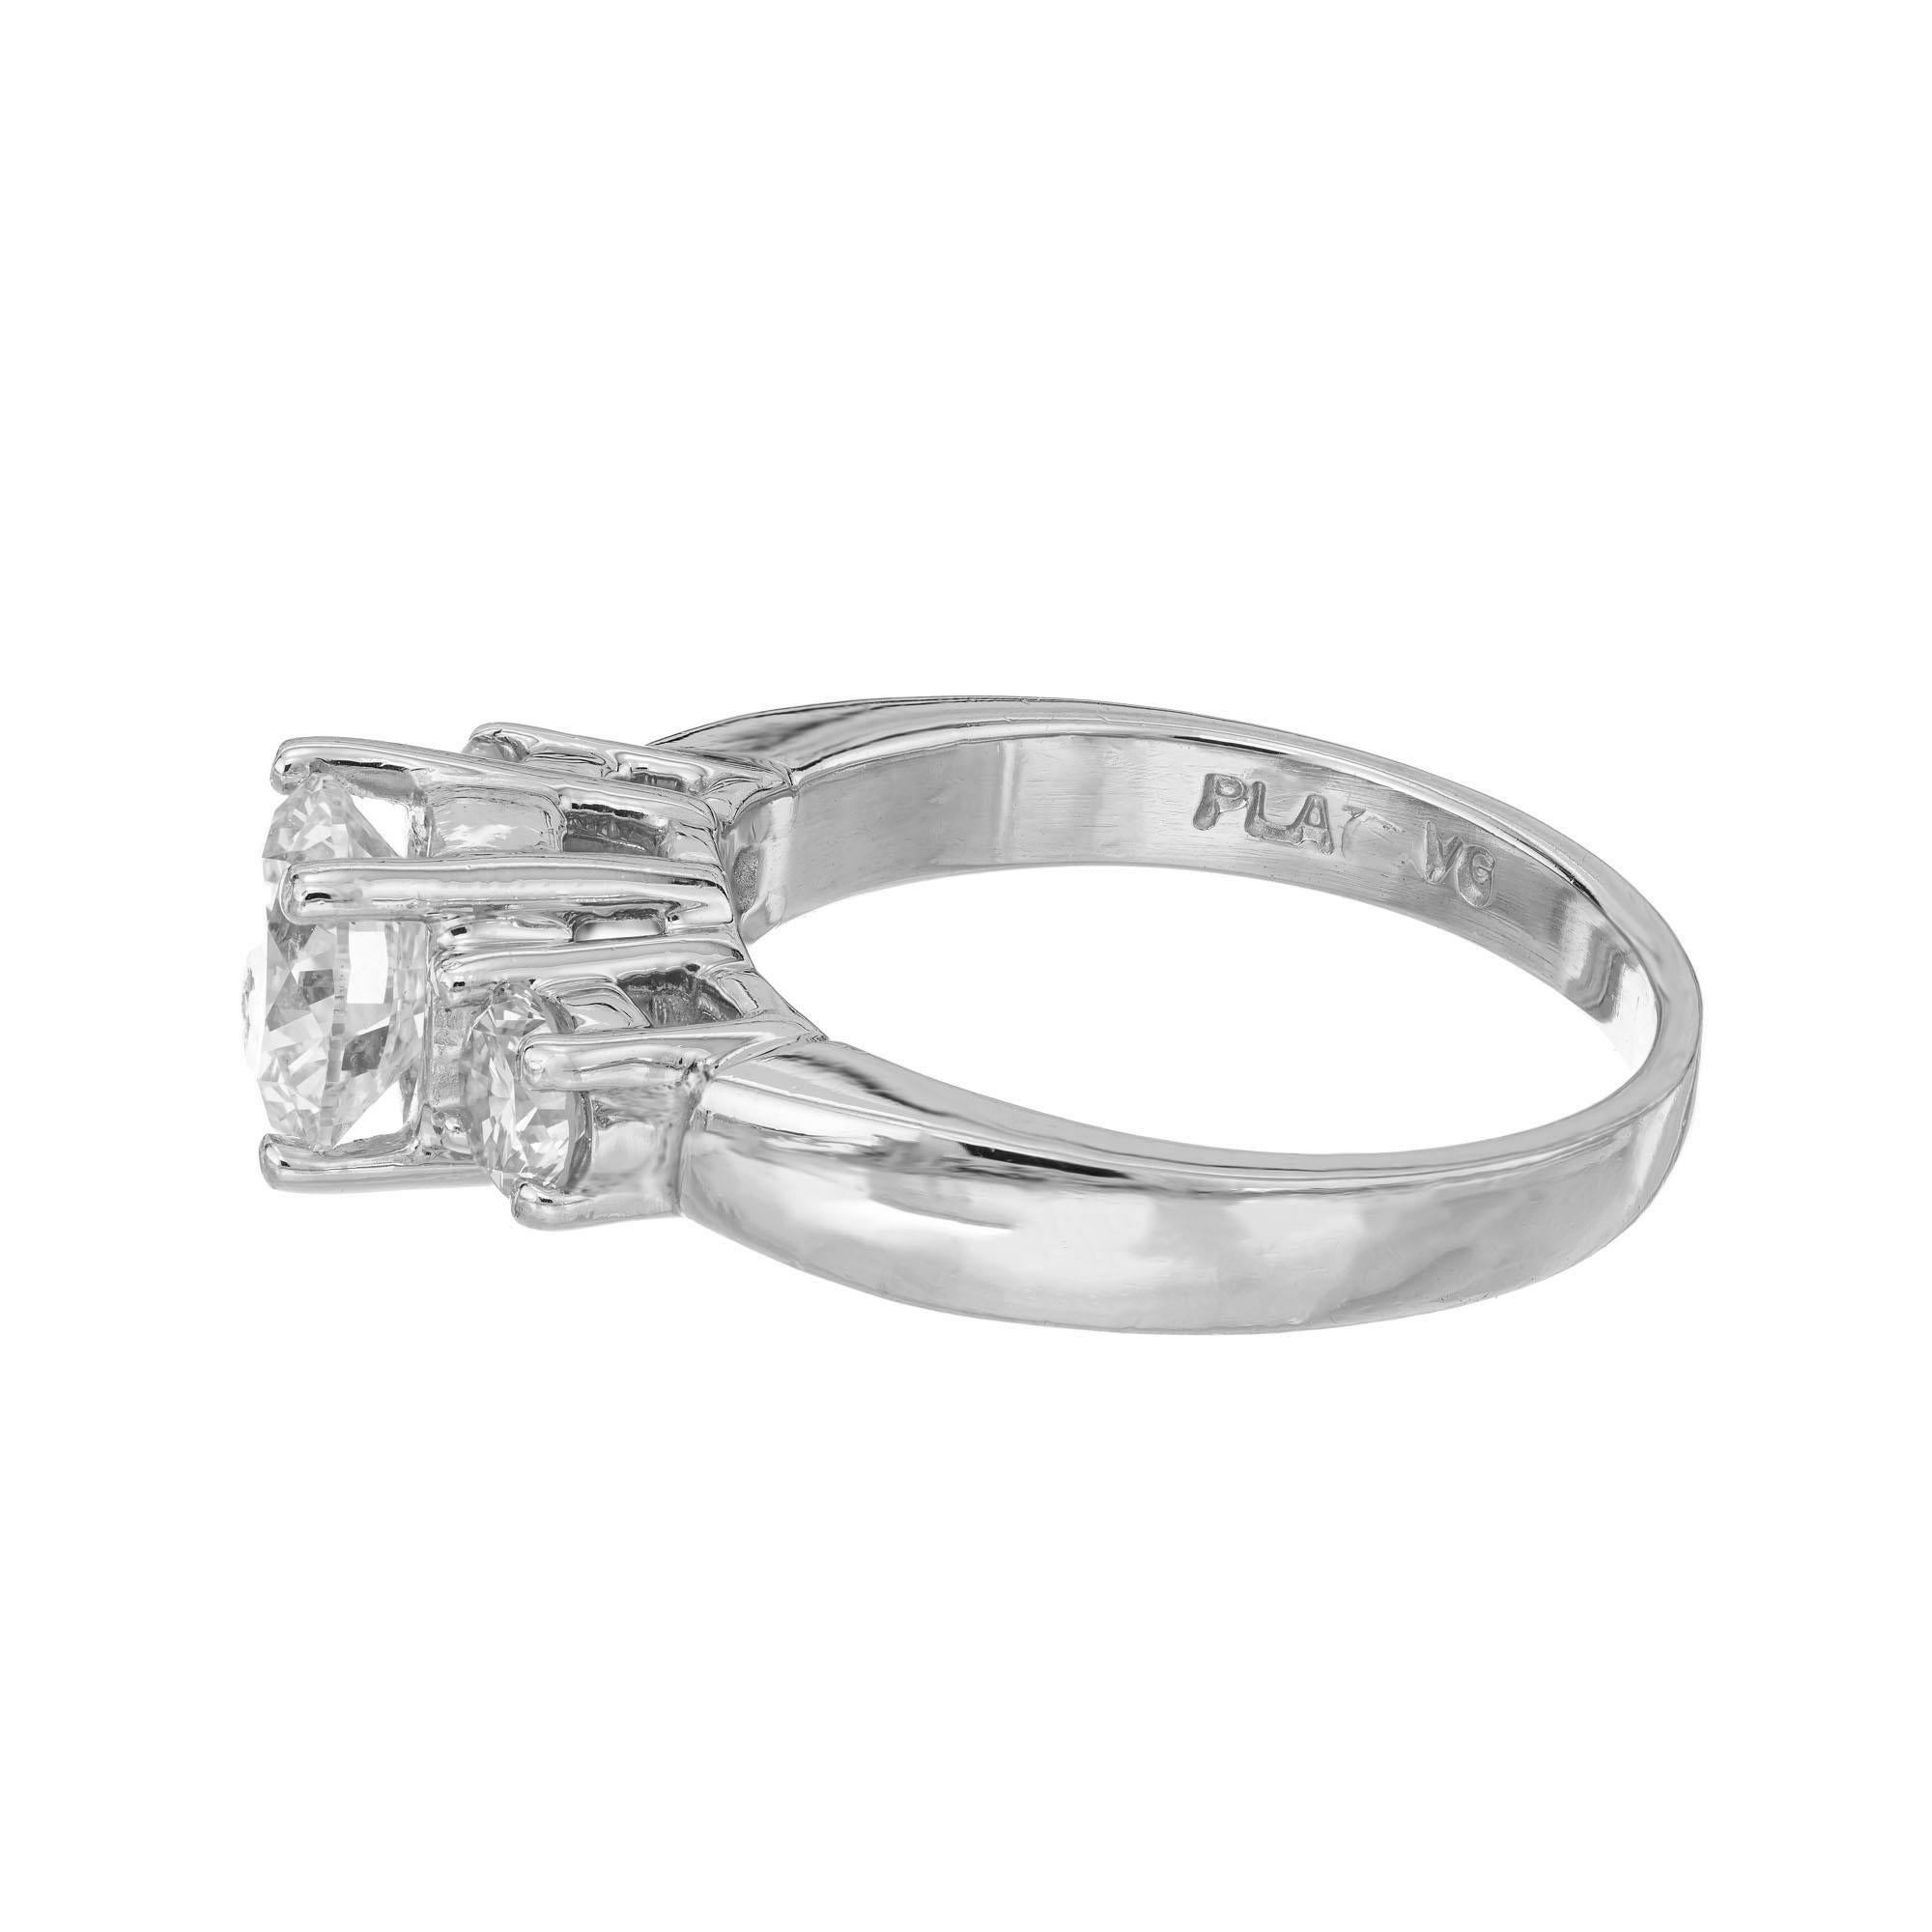 1.28 carat diamond engagement ring